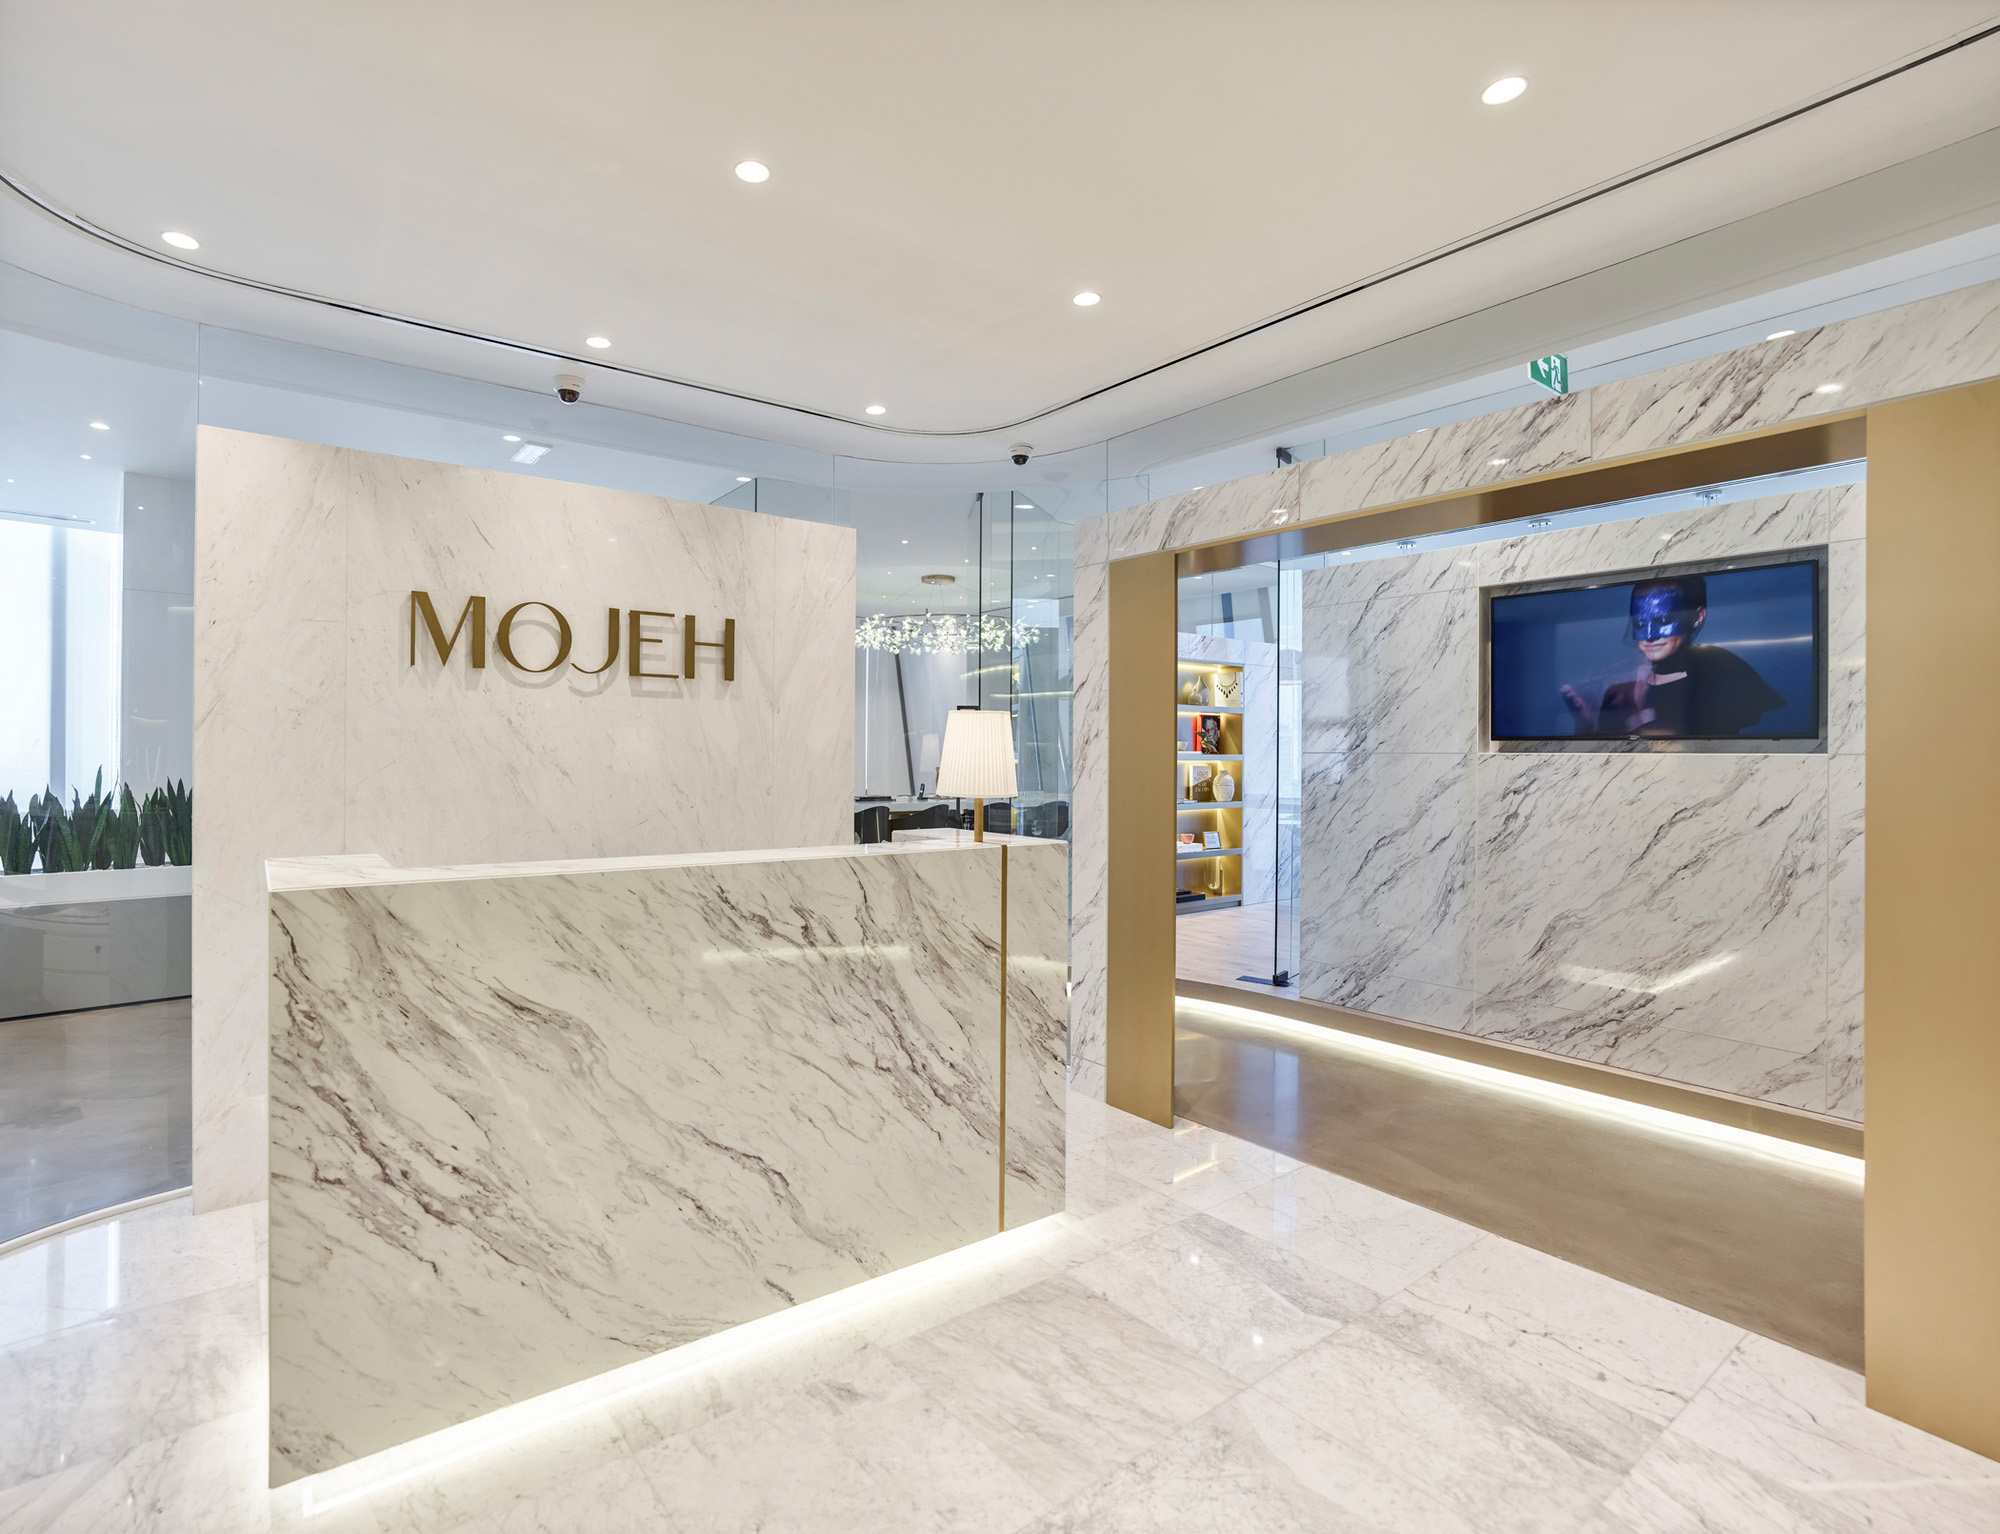 Mojeh Magazine Offices Dubai Office